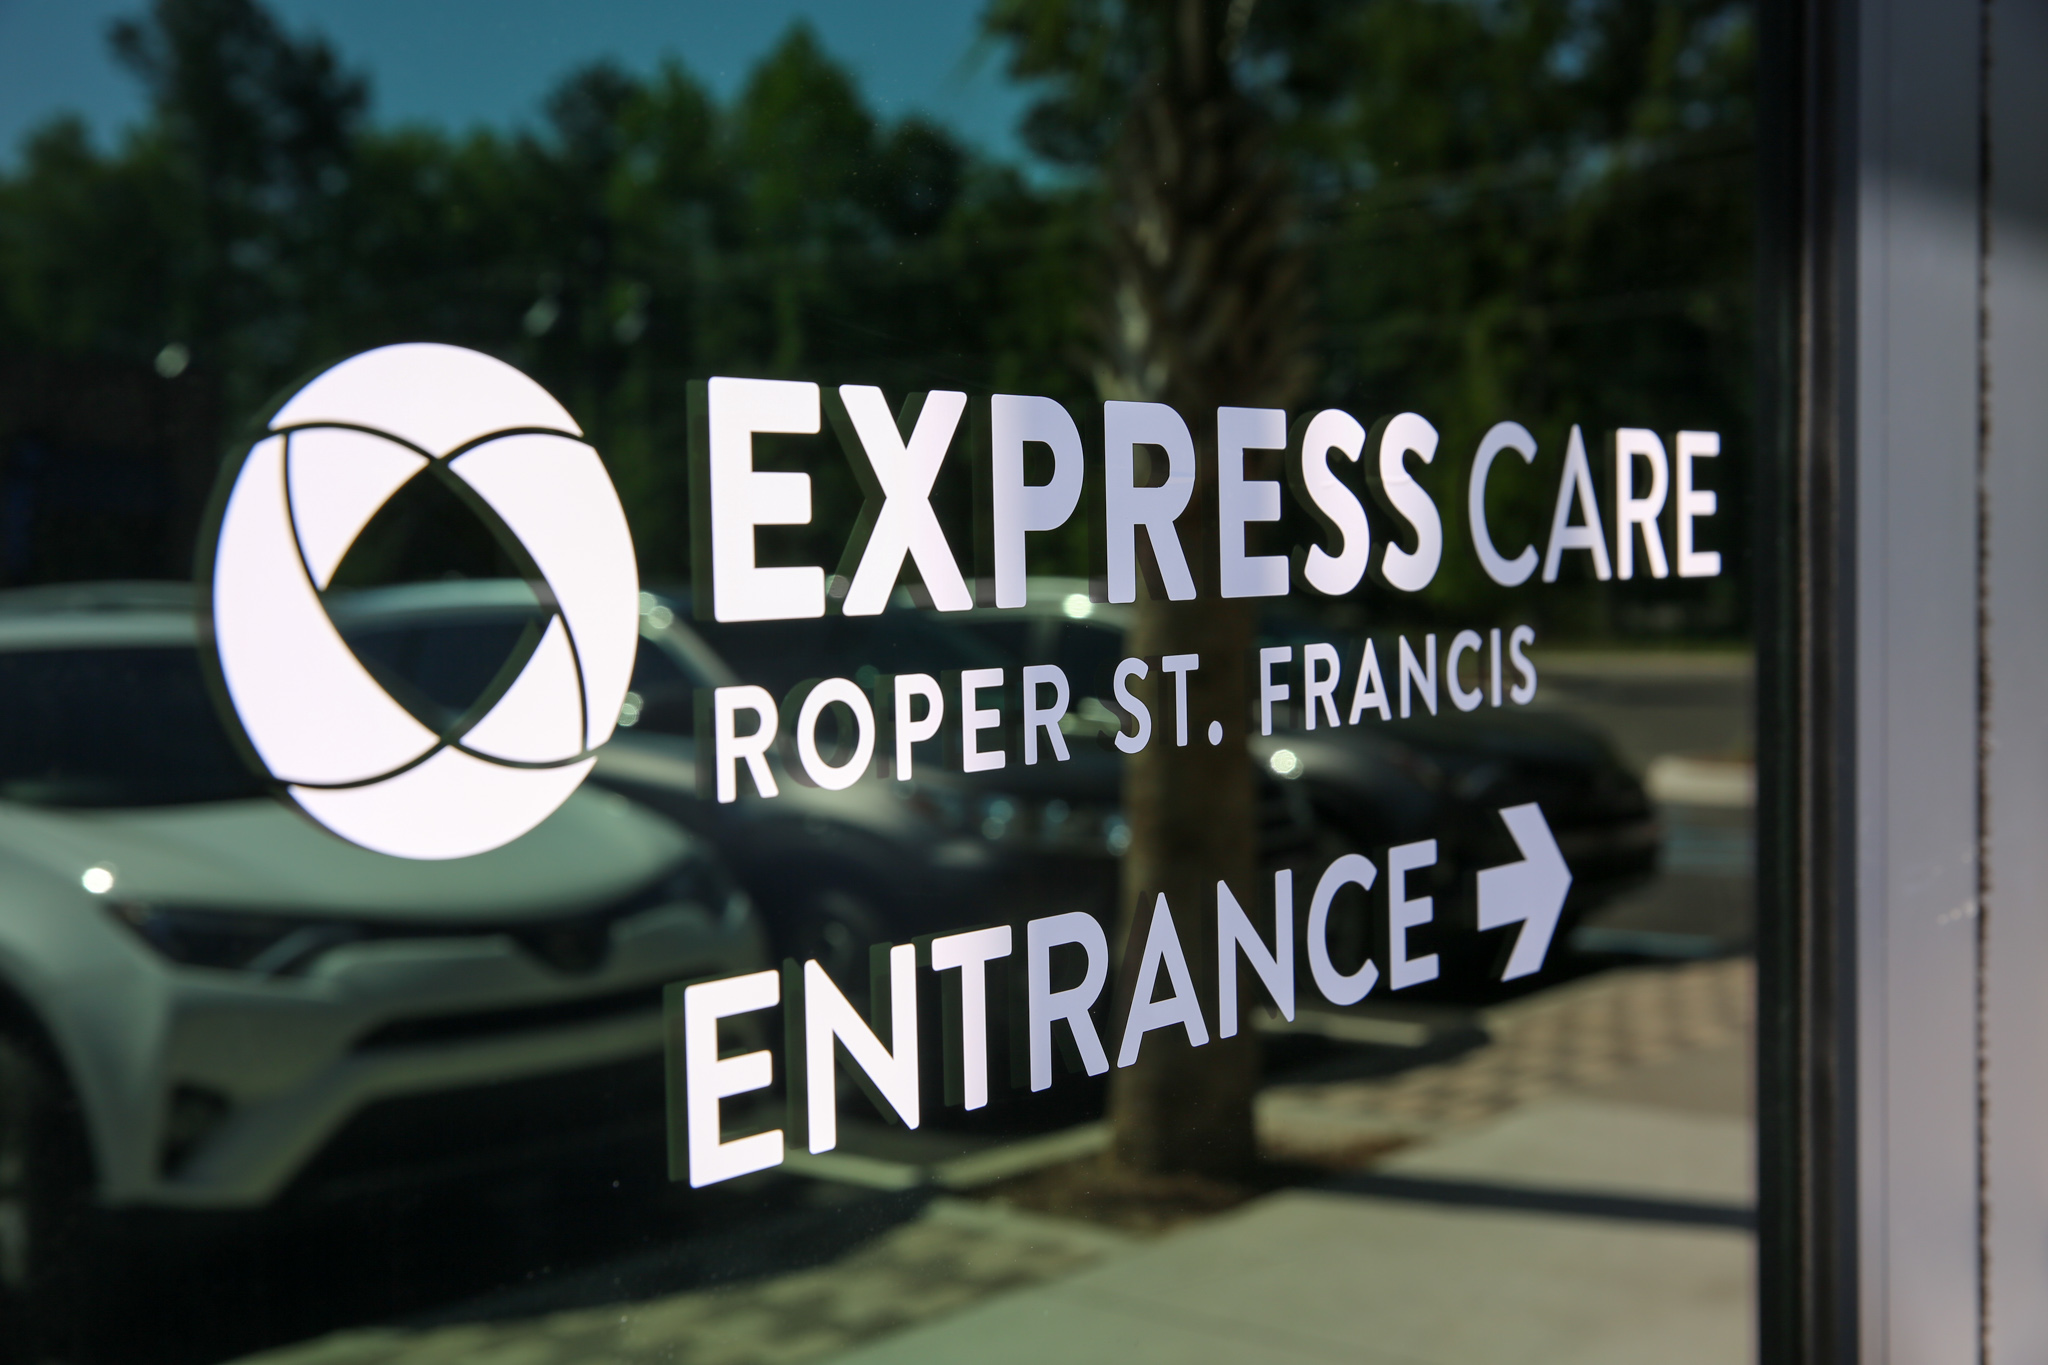 express care entrance door